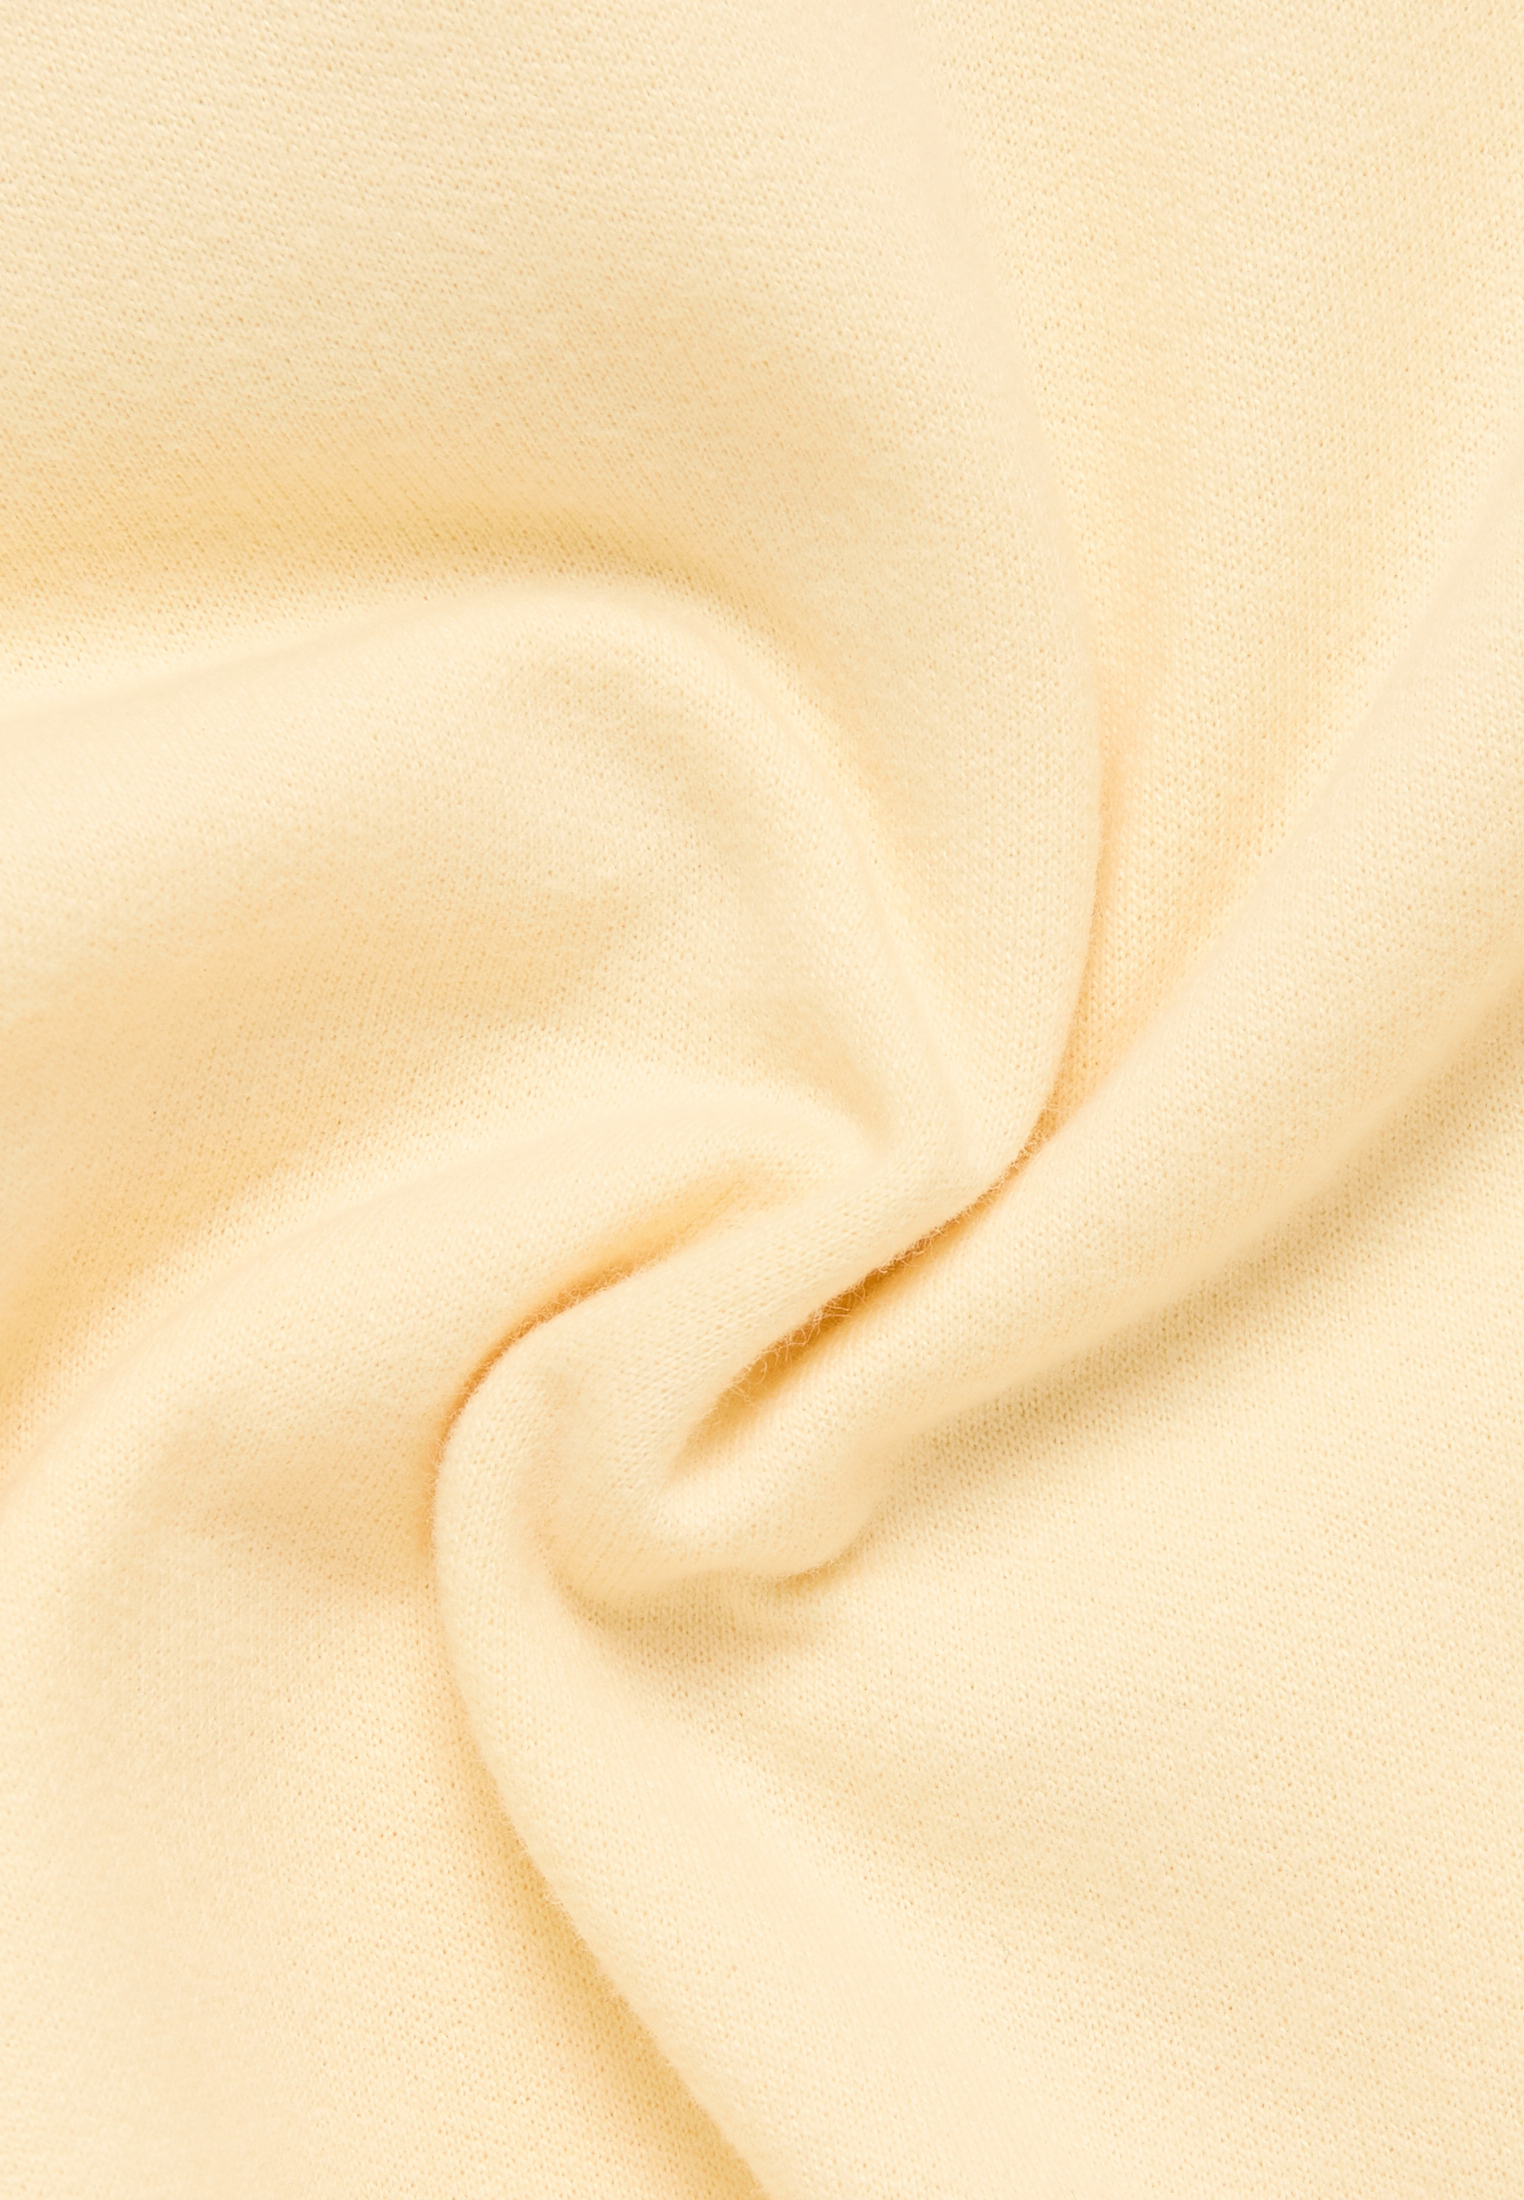 Strick Pullover in gelb unifarben